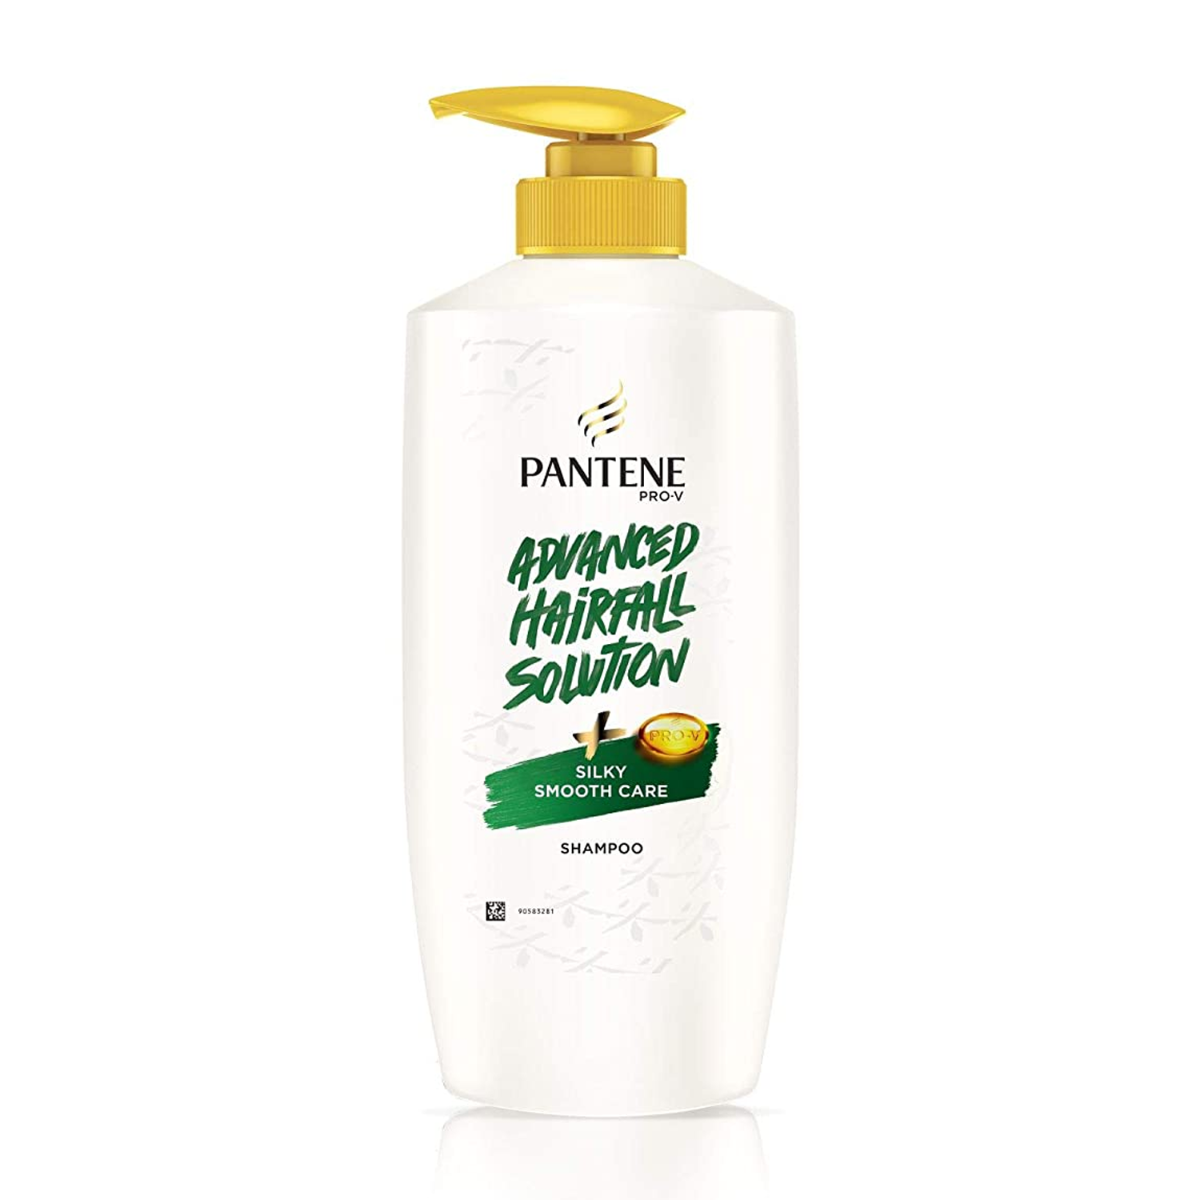 Pantene Advanced Hair Fall Solution Shampoo - Silky Smooth Care, 650ml